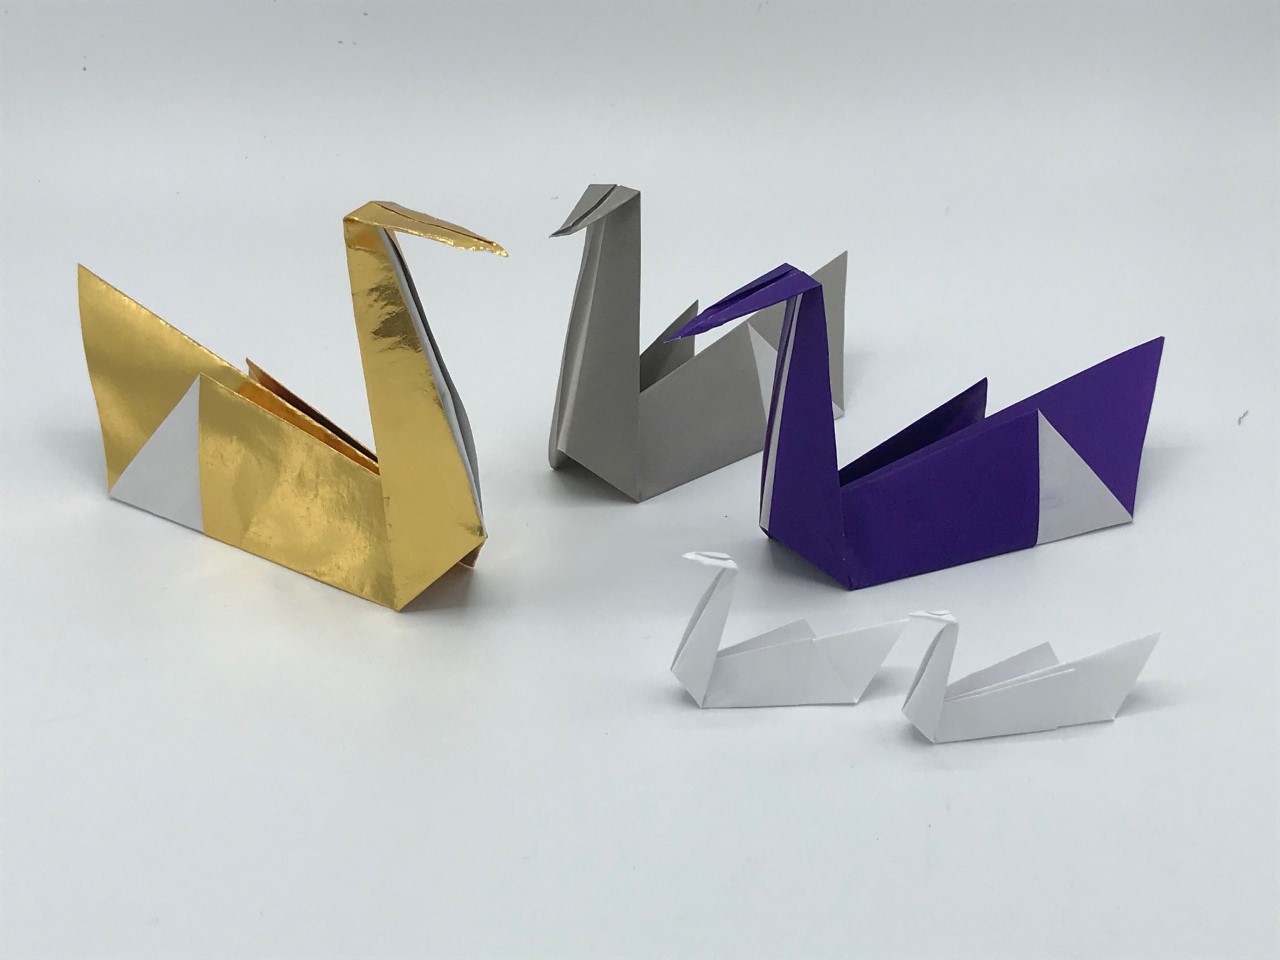 Take & Make Kit: Origami Paper Cranes